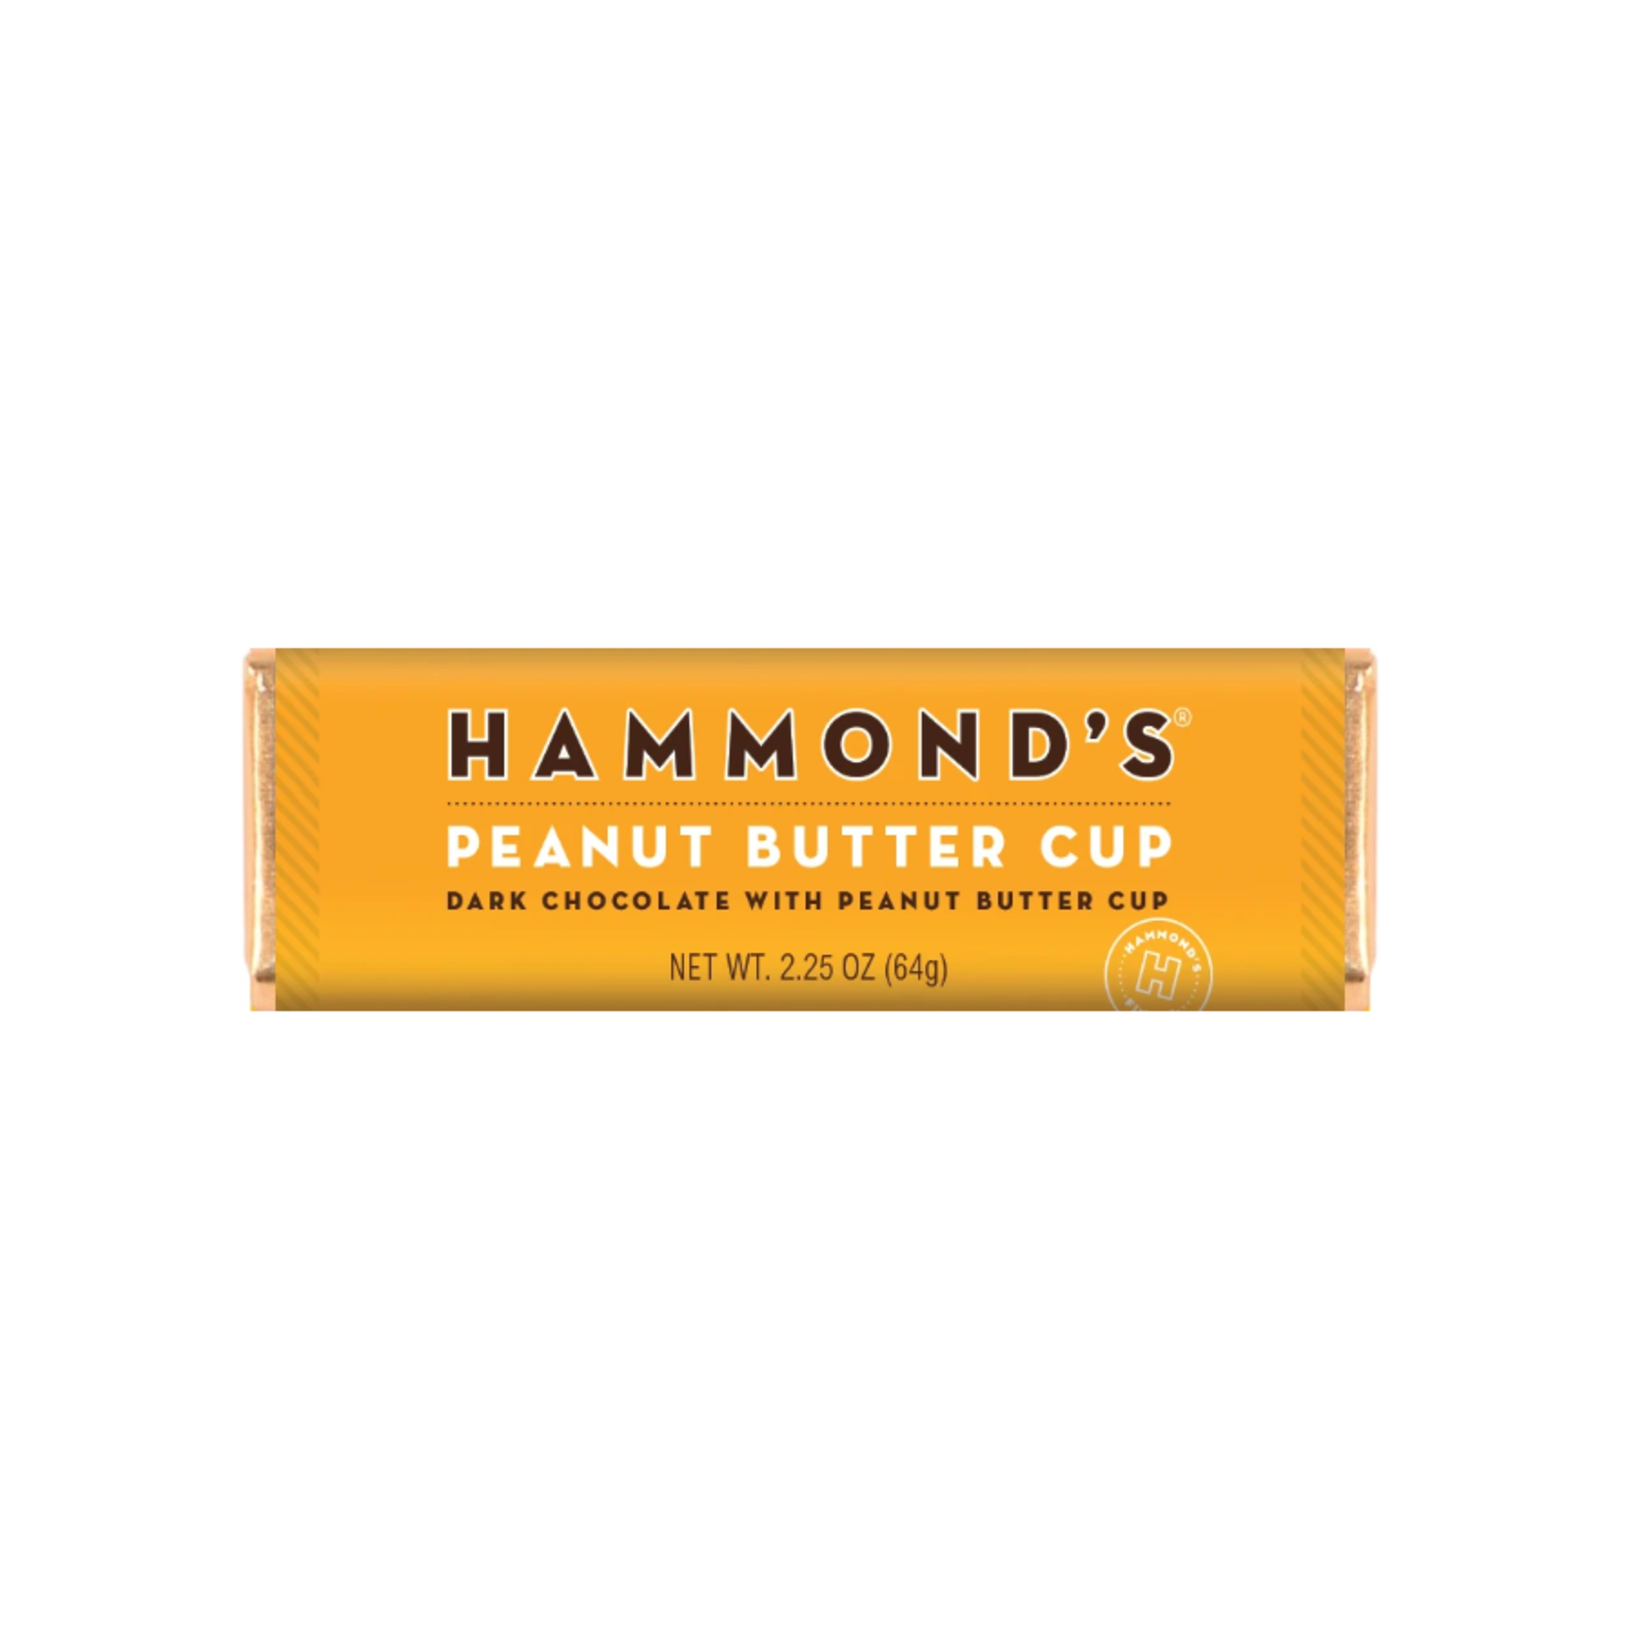 Hammond's Peanut Butter Cup Choc Bar